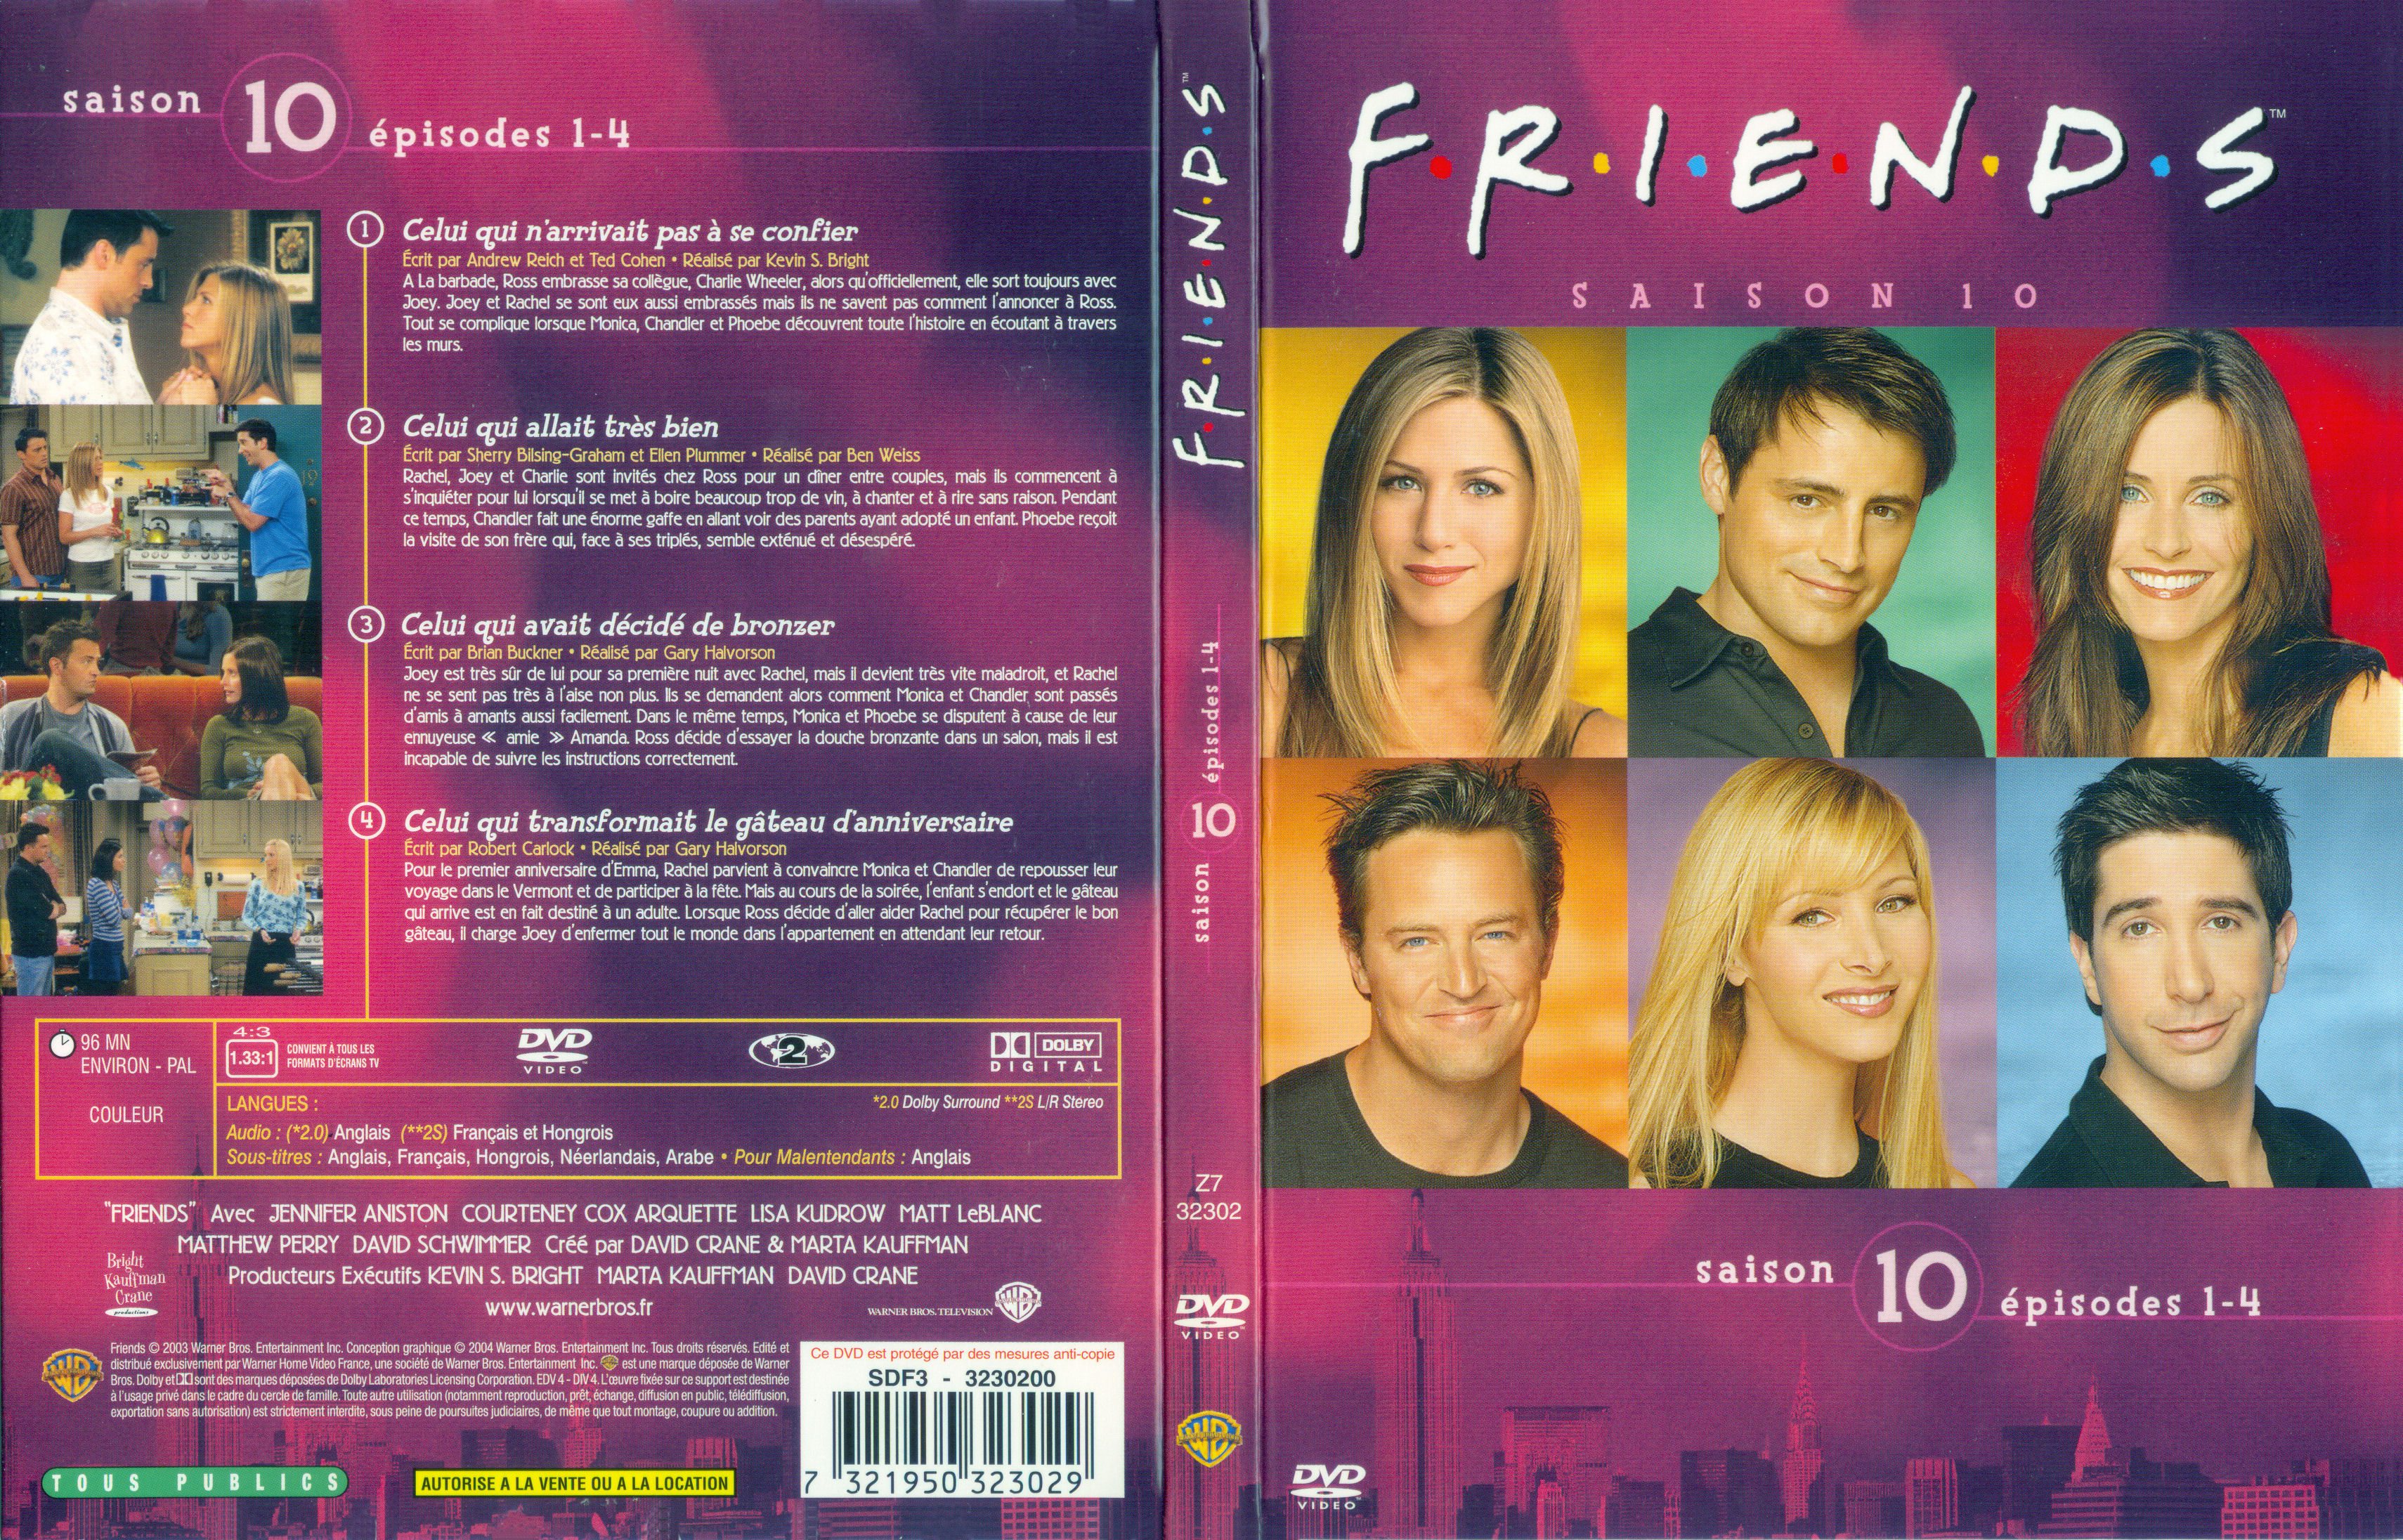 Jaquette DVD Friends saison 10 dvd 1